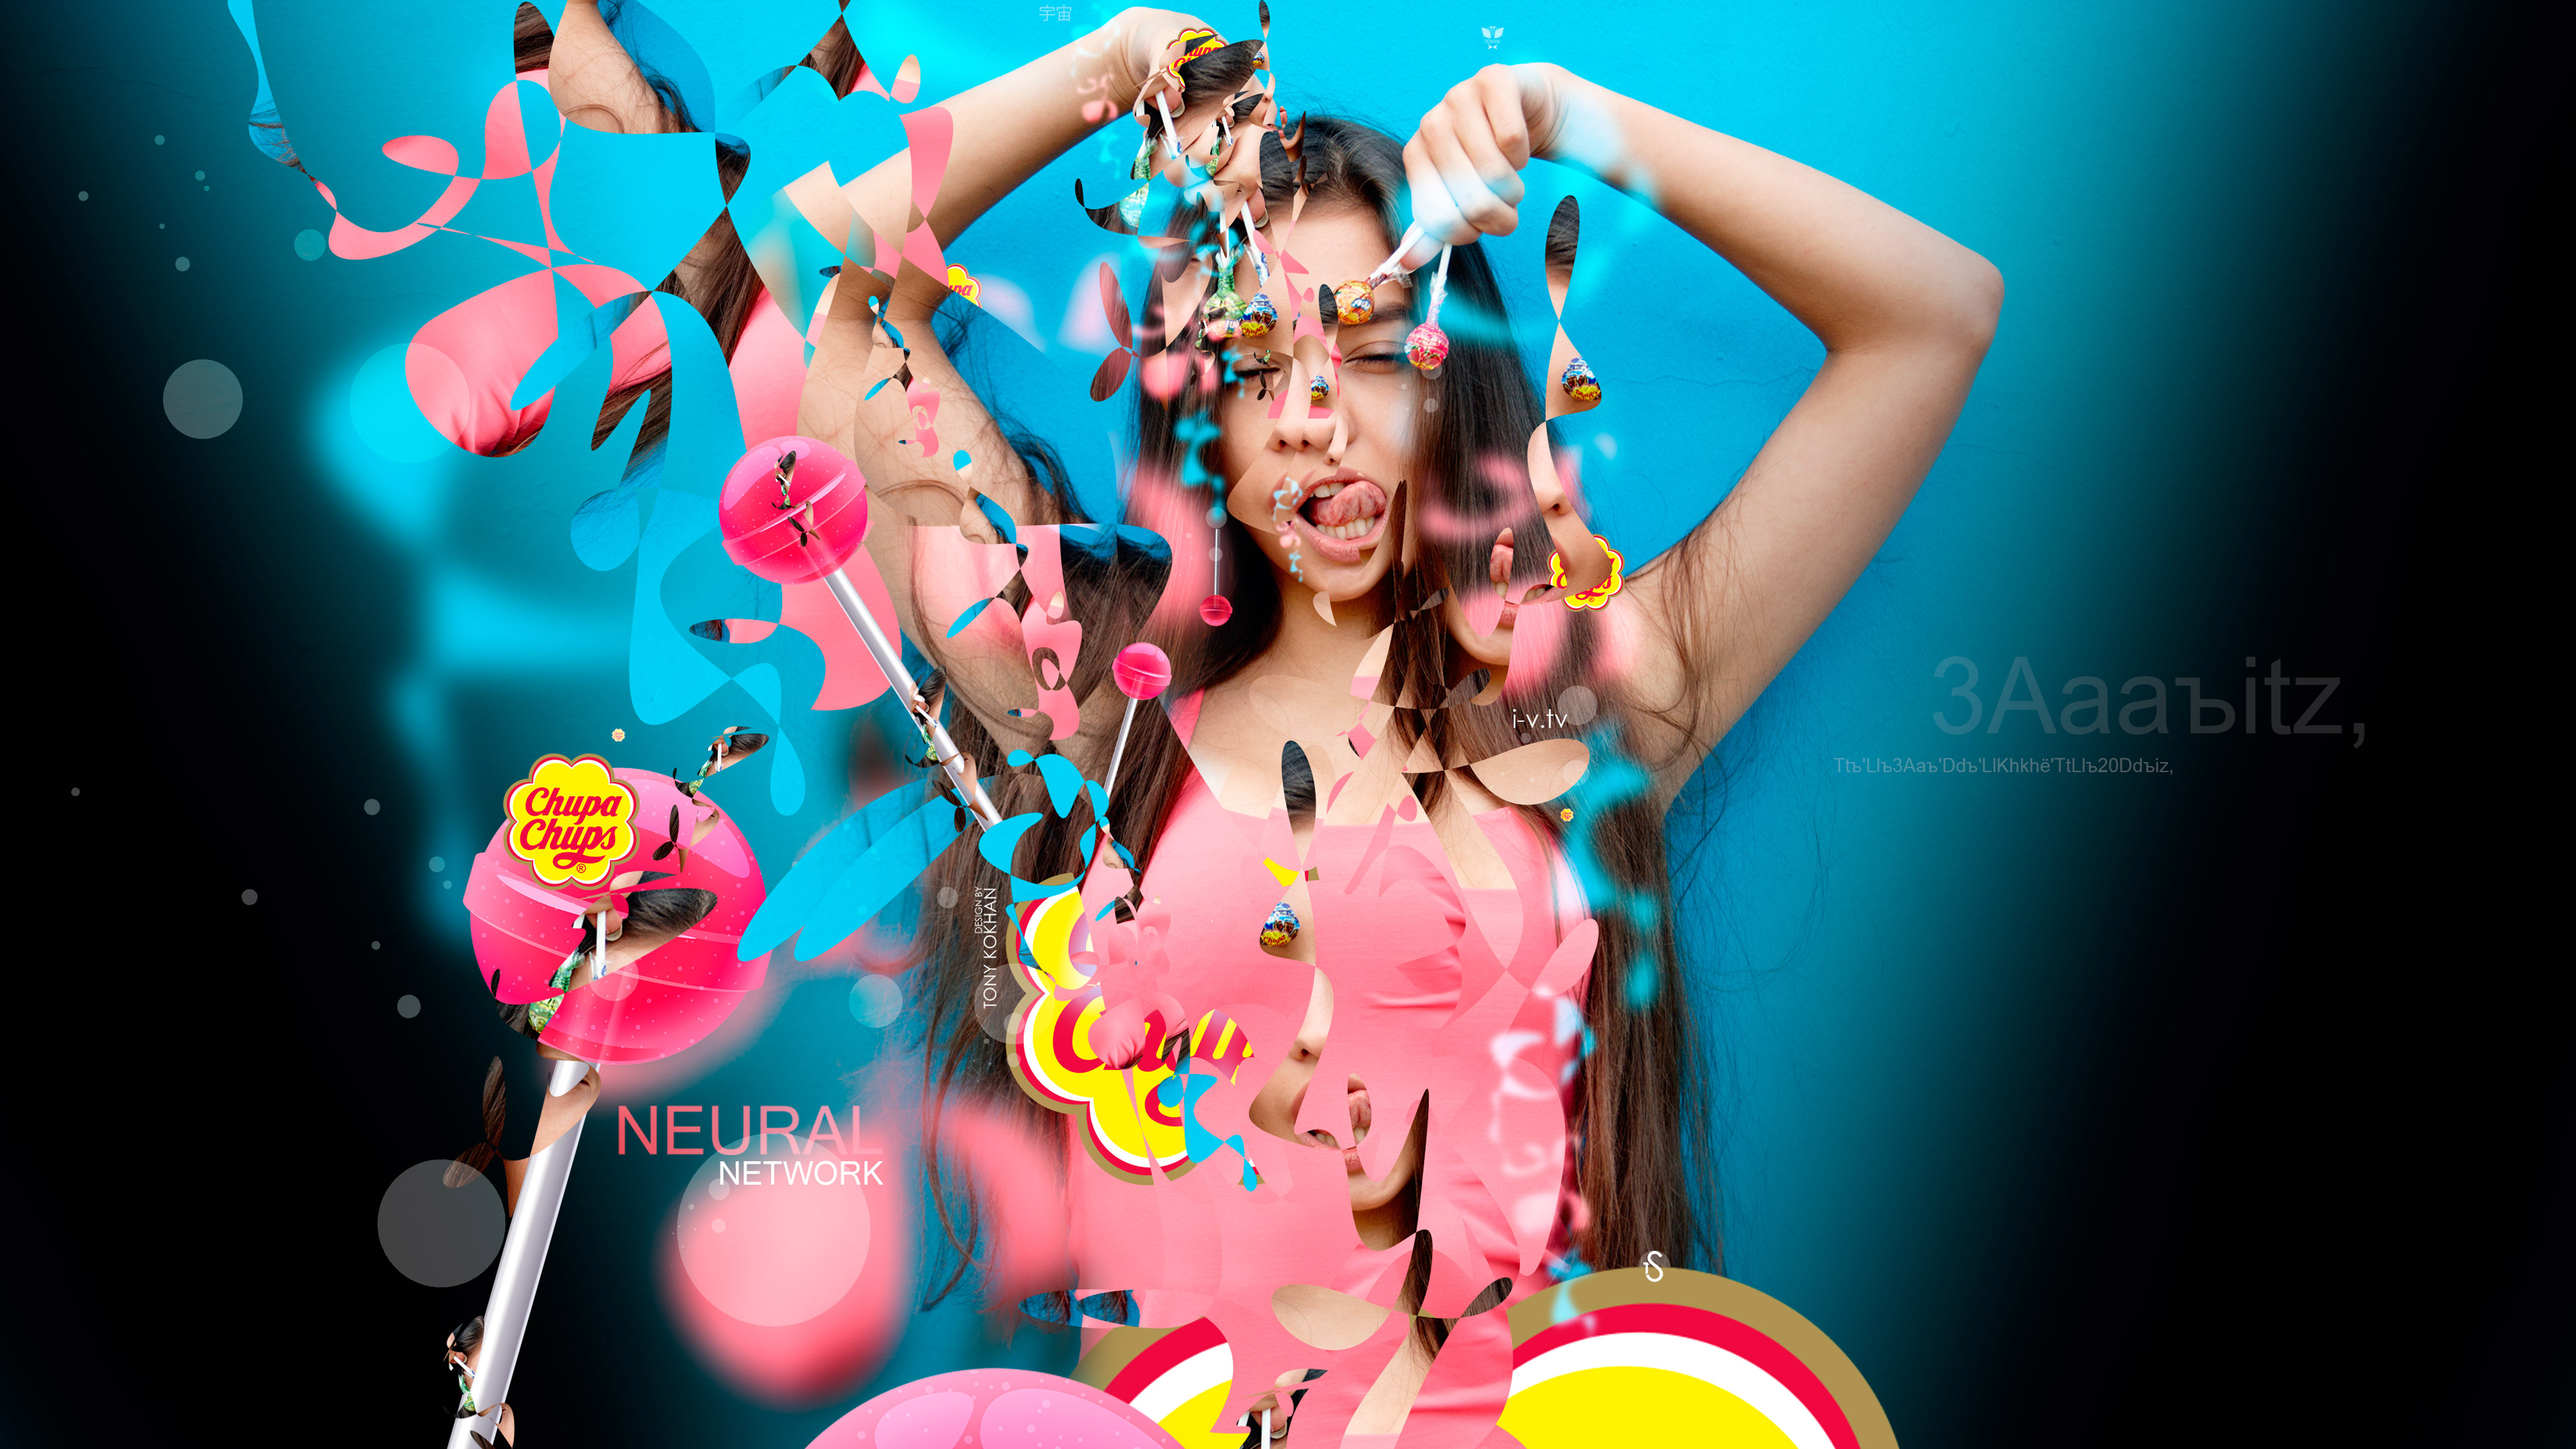 Neural-Network-Fashion-Girl-Super-Plastic-Chupa-Chups-Candy-Emotions-TonysGgiTz-Art